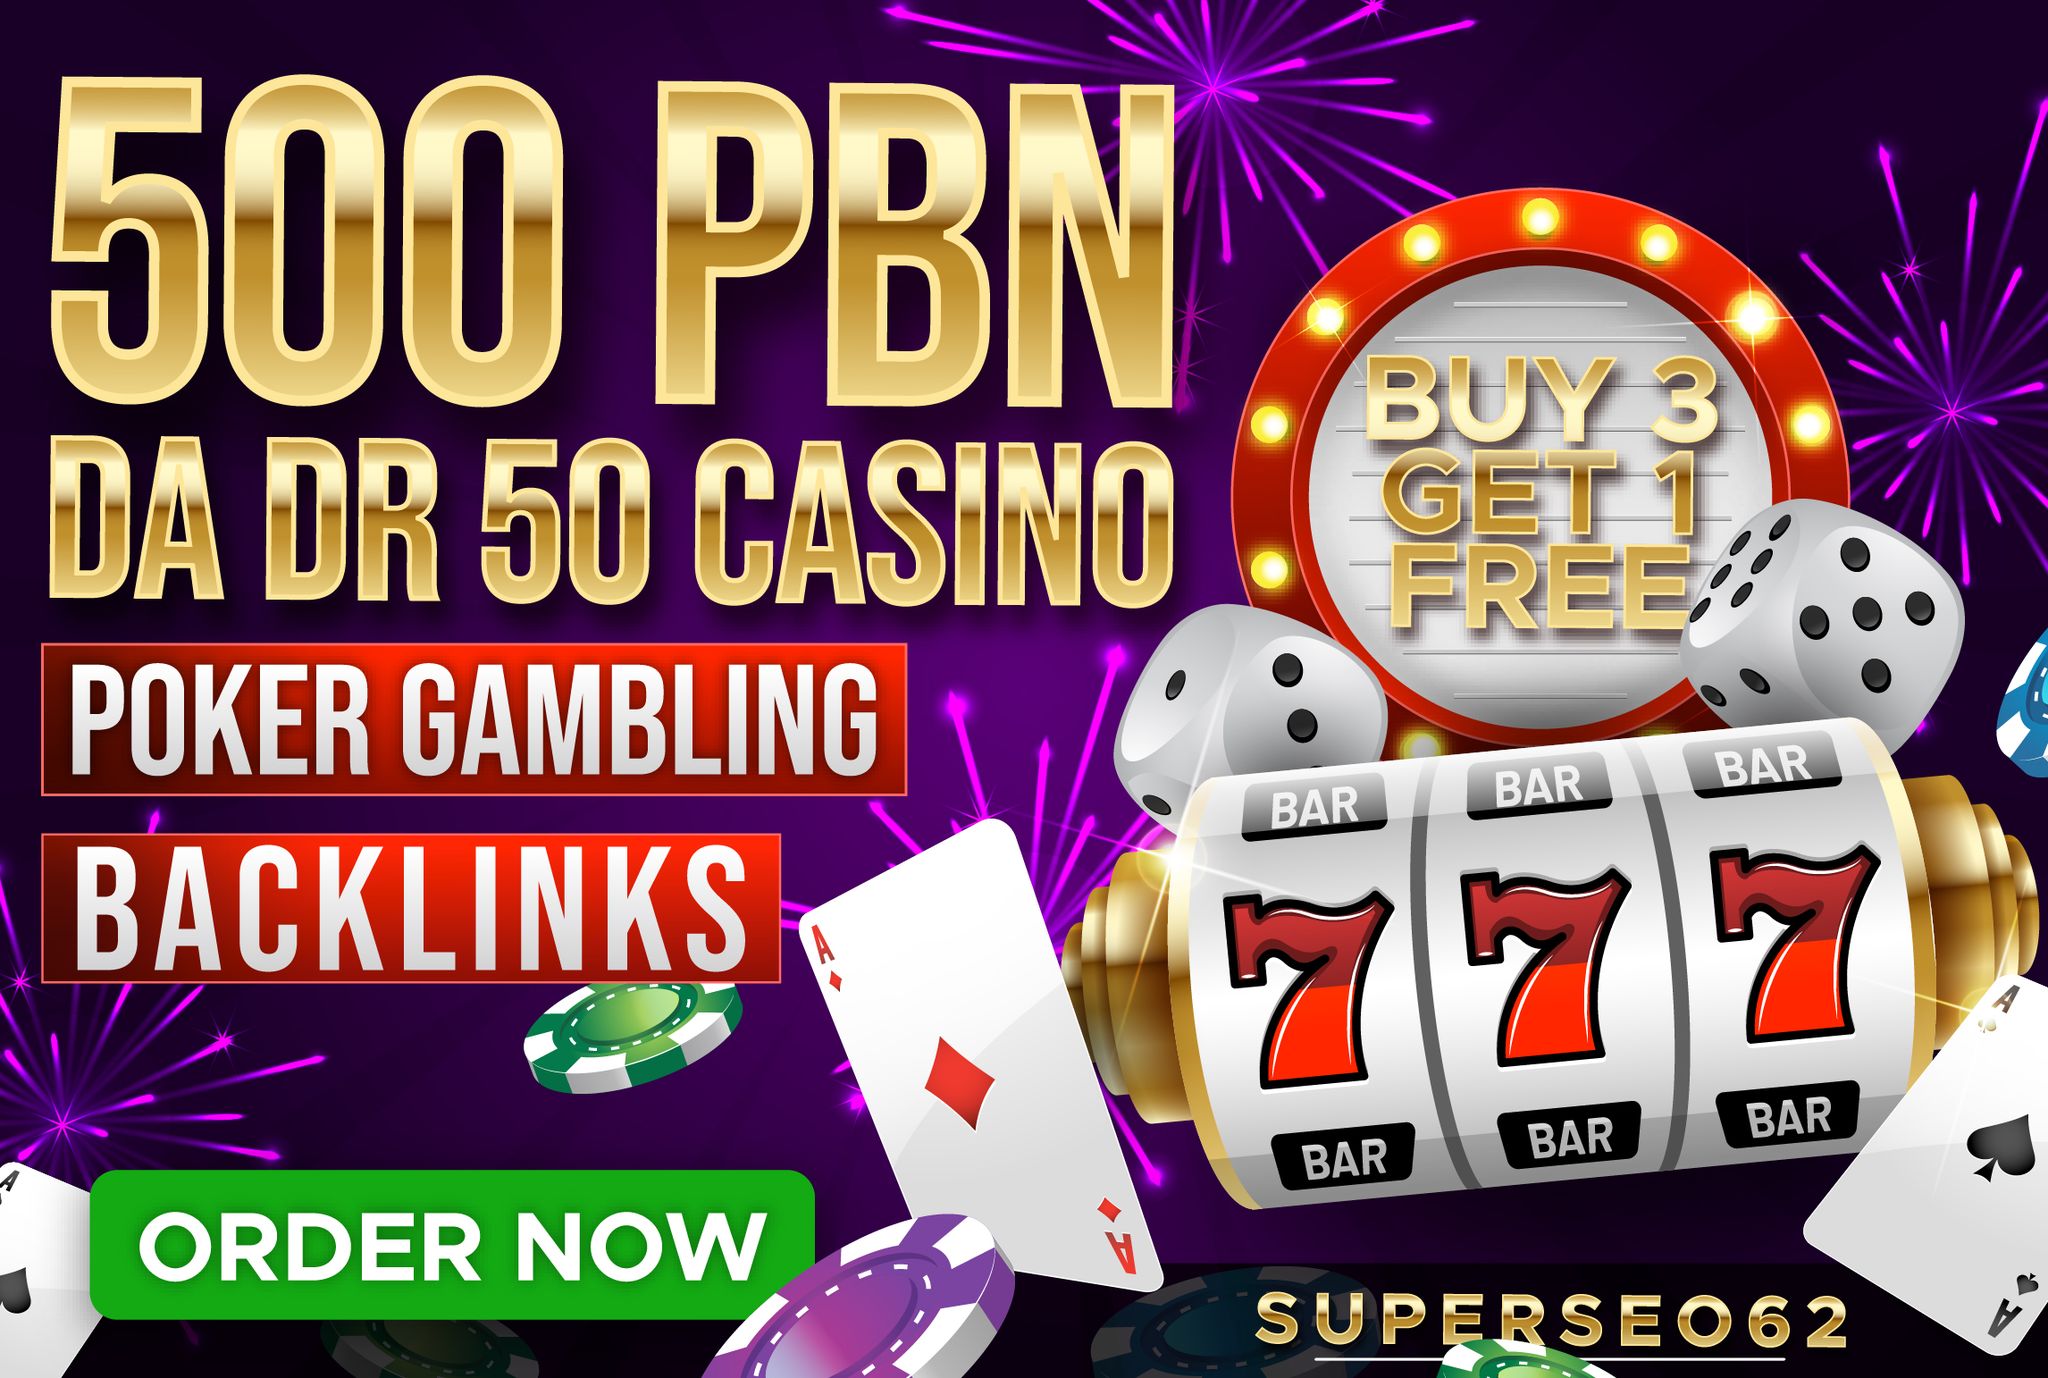 LIMITED OFFER - Buy 3 Get 1 Free- 500 Unique Homepage DA/DR 50 PBNs CASINO GAMBLING POKER backlinks